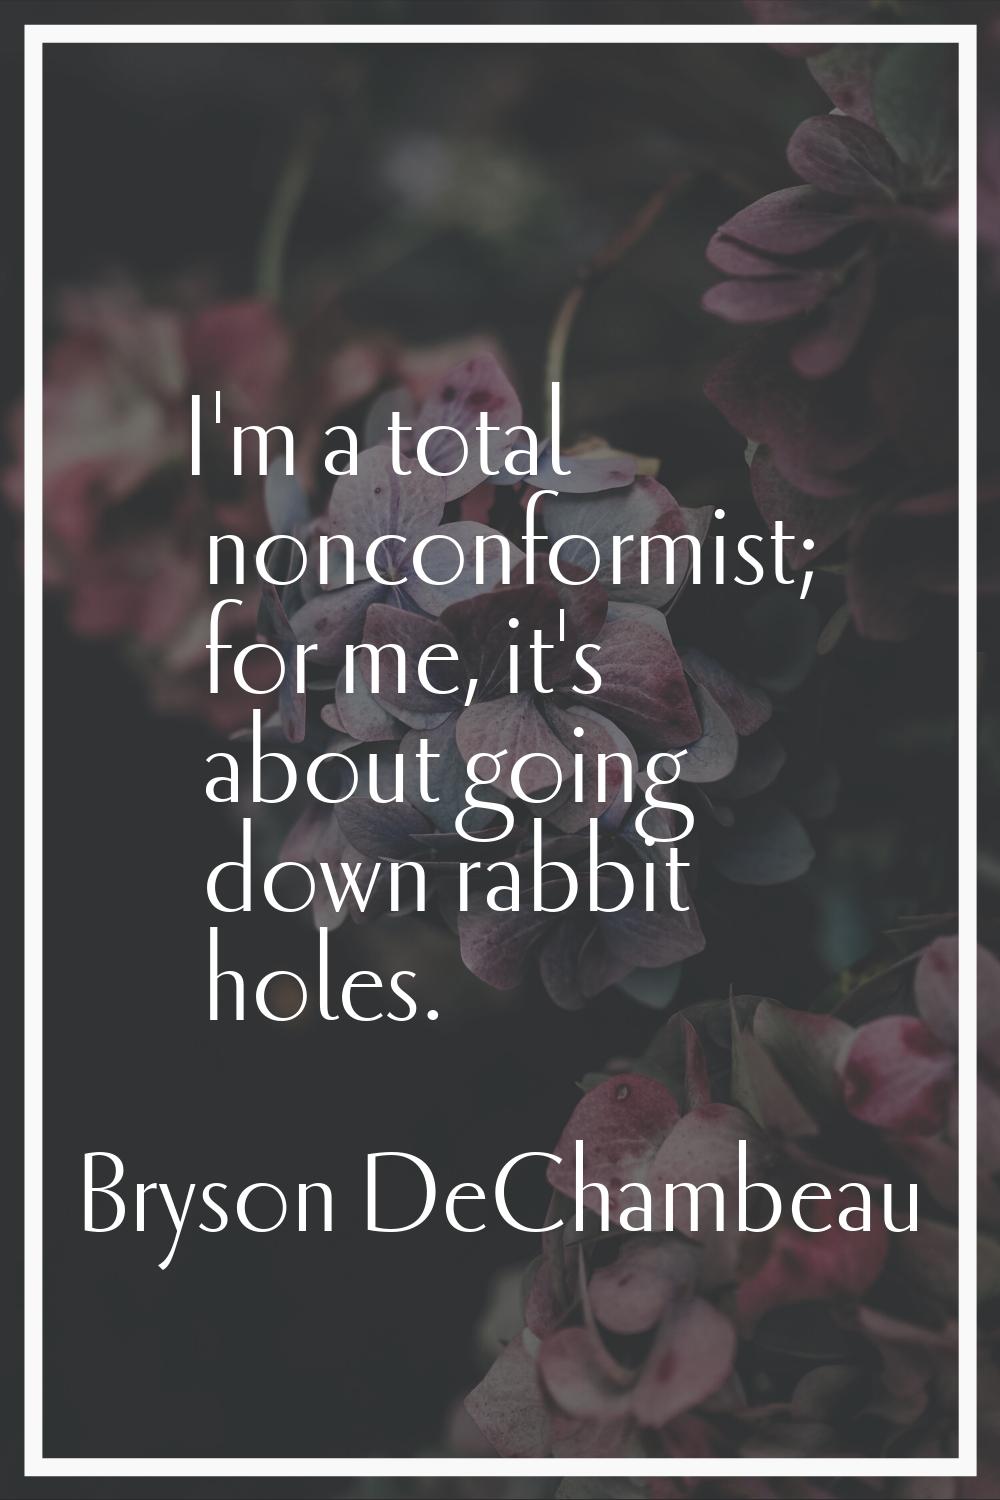 I'm a total nonconformist; for me, it's about going down rabbit holes.